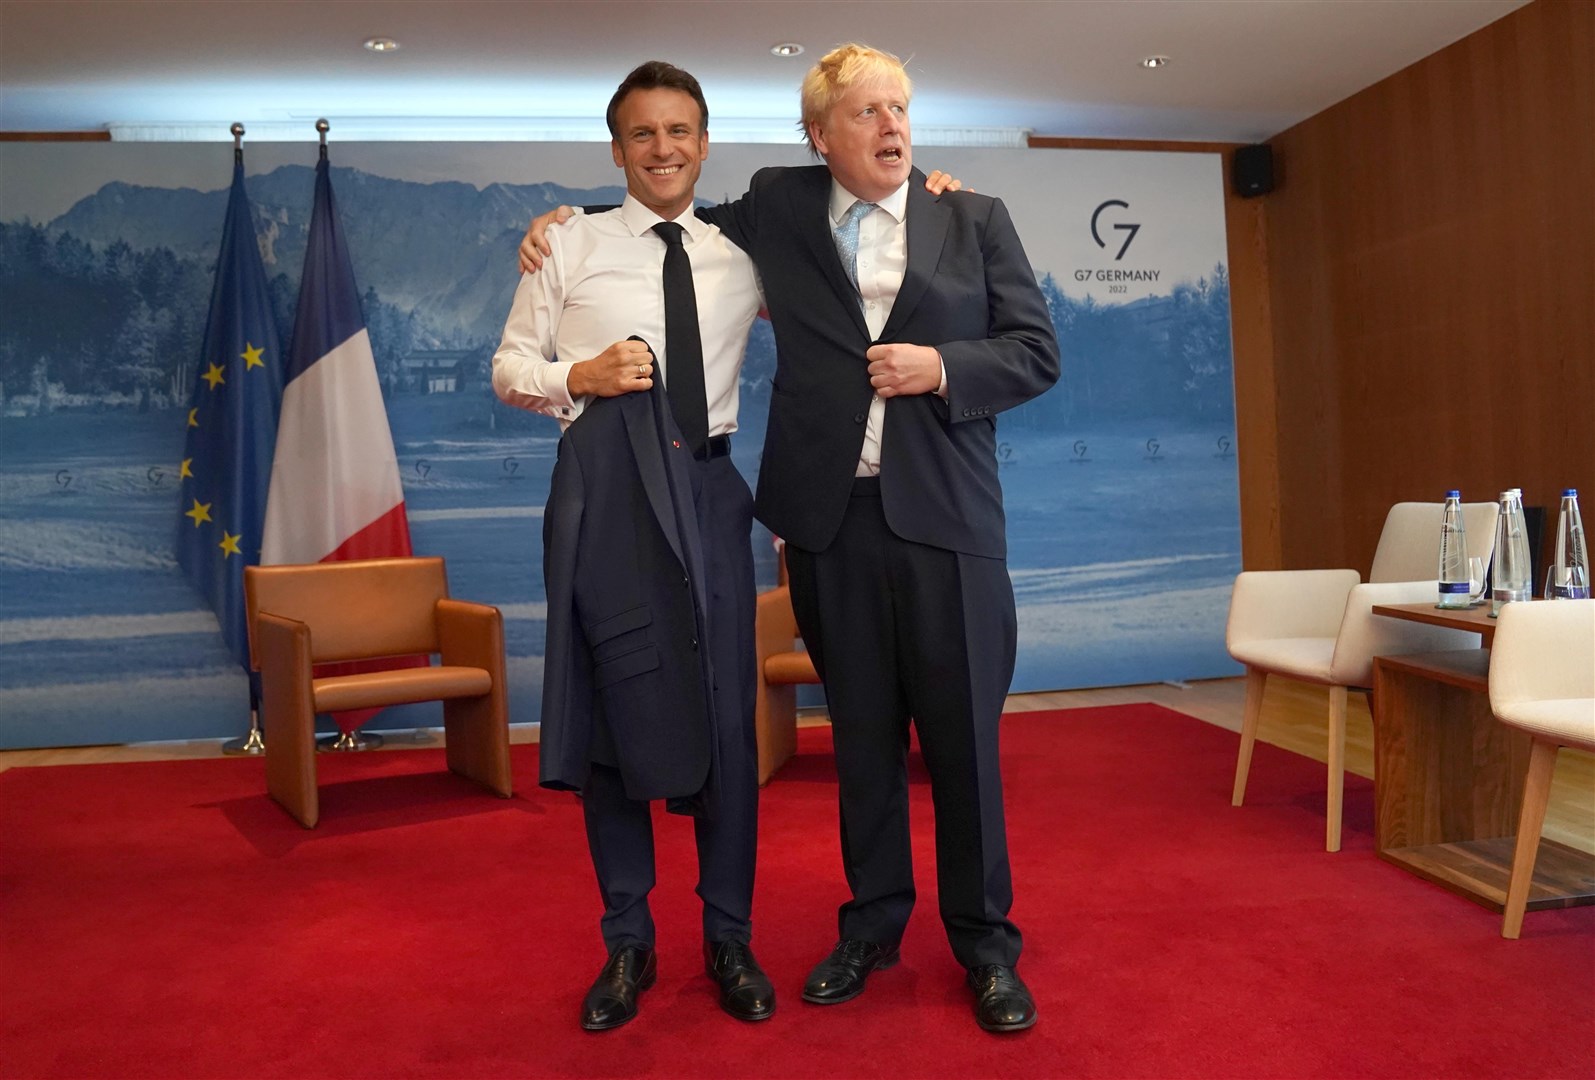 Prime Minister Boris Johnson greets French President Emmanuel Macron at the G7 summit (Stefan Rousseau/PA)